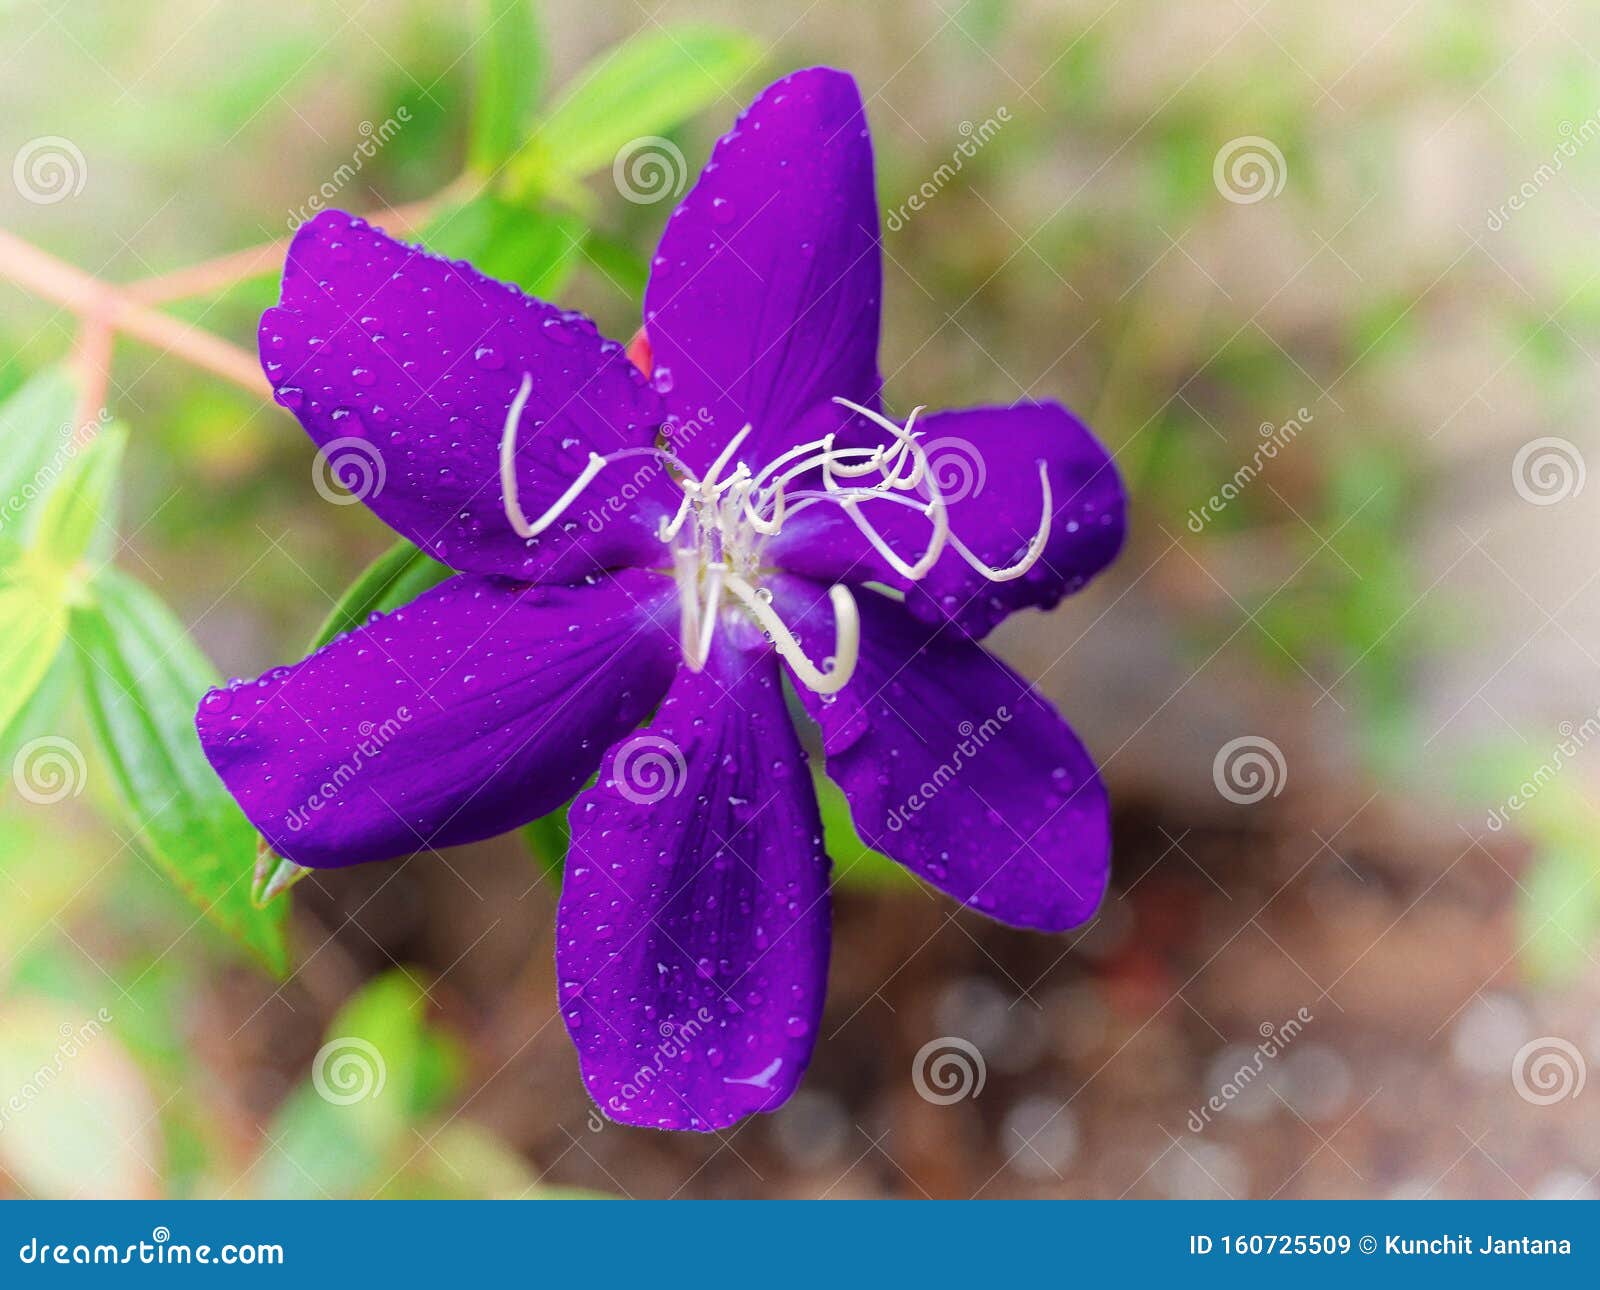 Brazilian Spider Flower Stock Image Image Of Leaf Garden 160725509